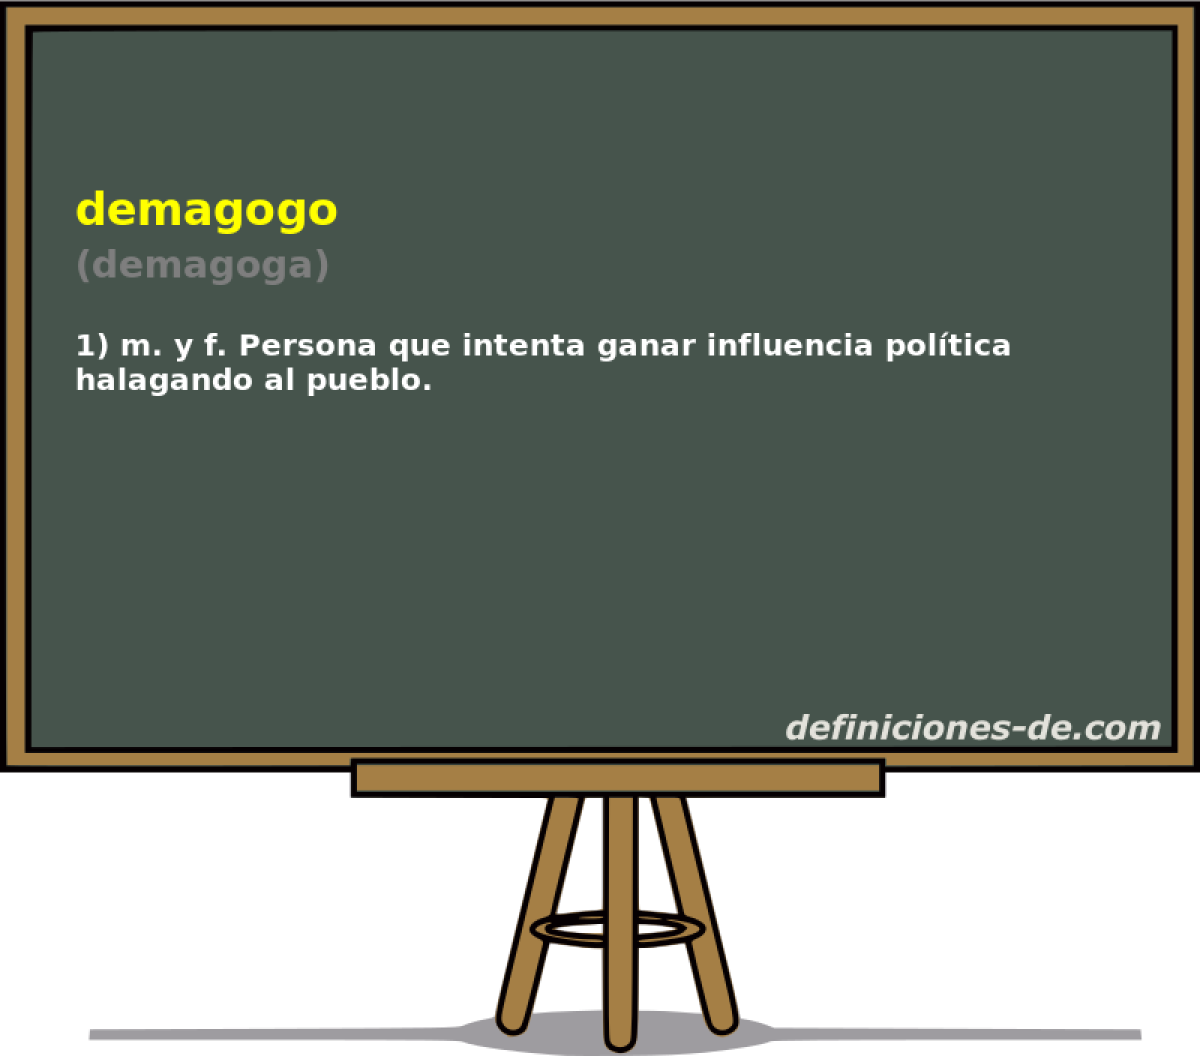 demagogo (demagoga)